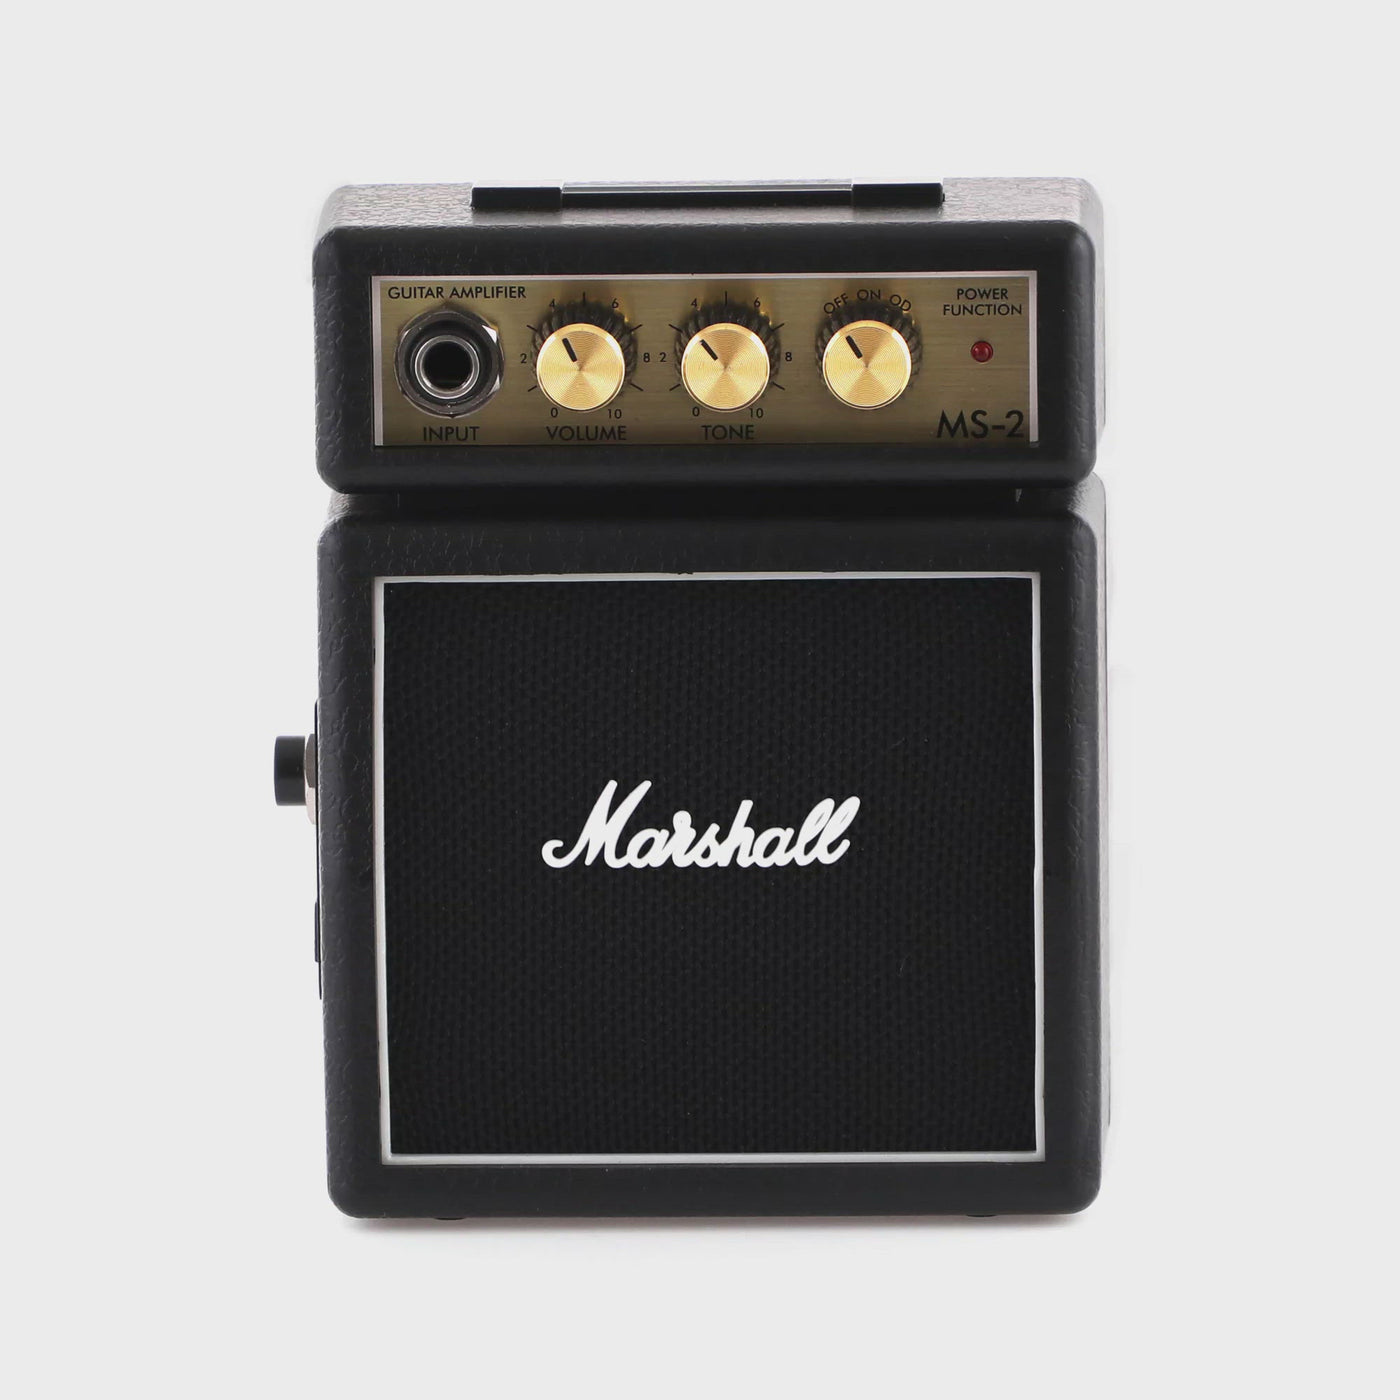 Marshall MS-2 Micro Amplifier